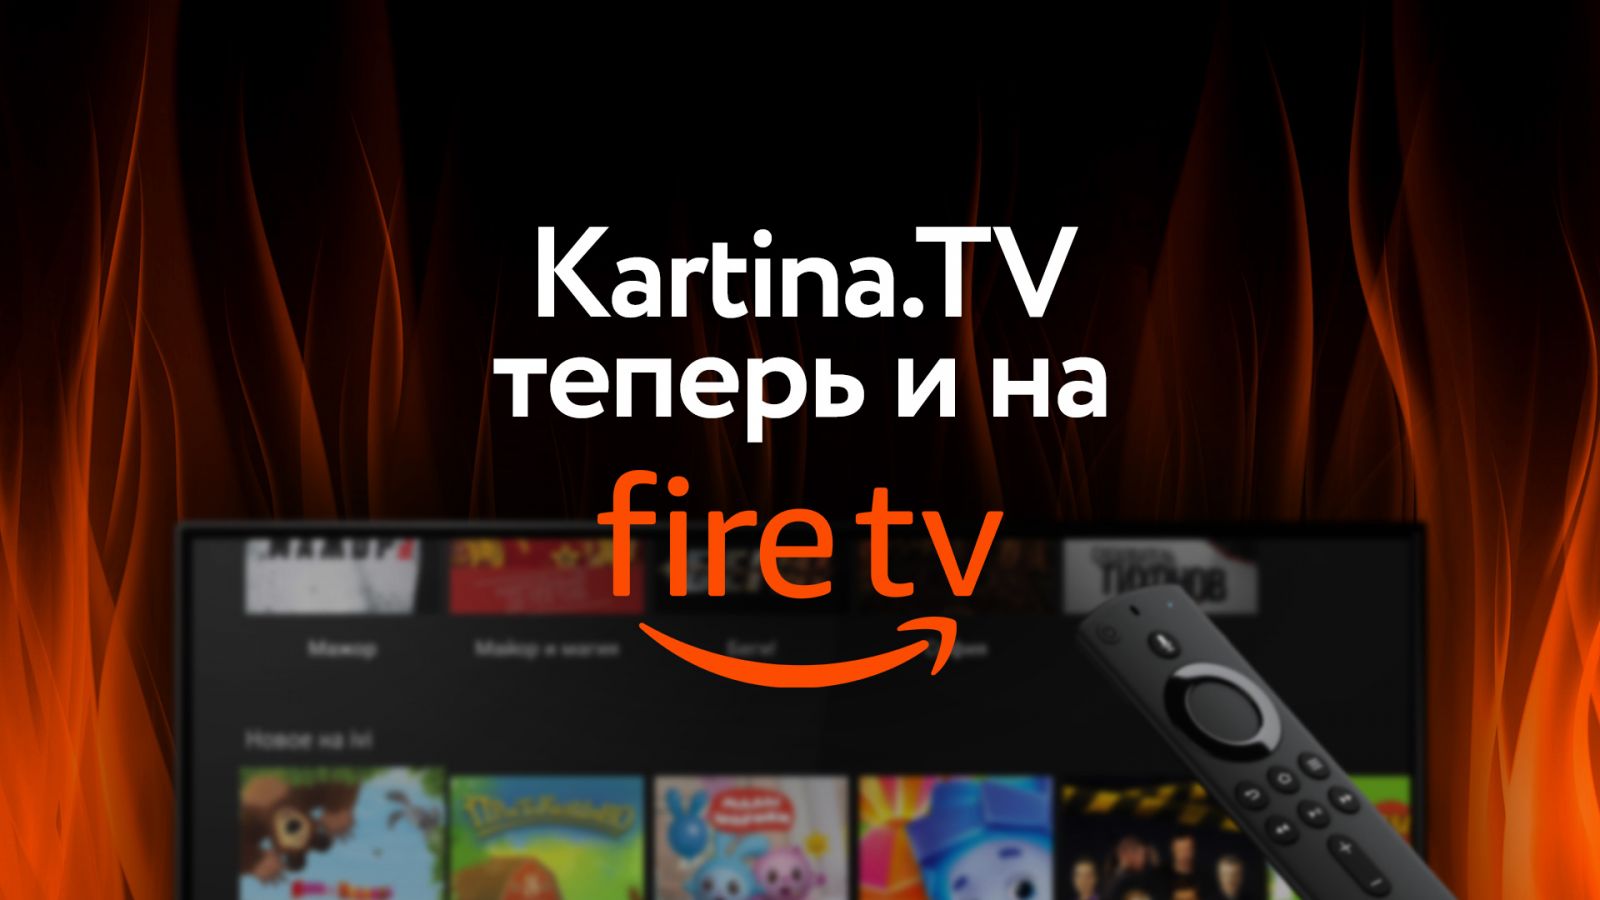 Kartina.TV на Amazon Fire TV Stick